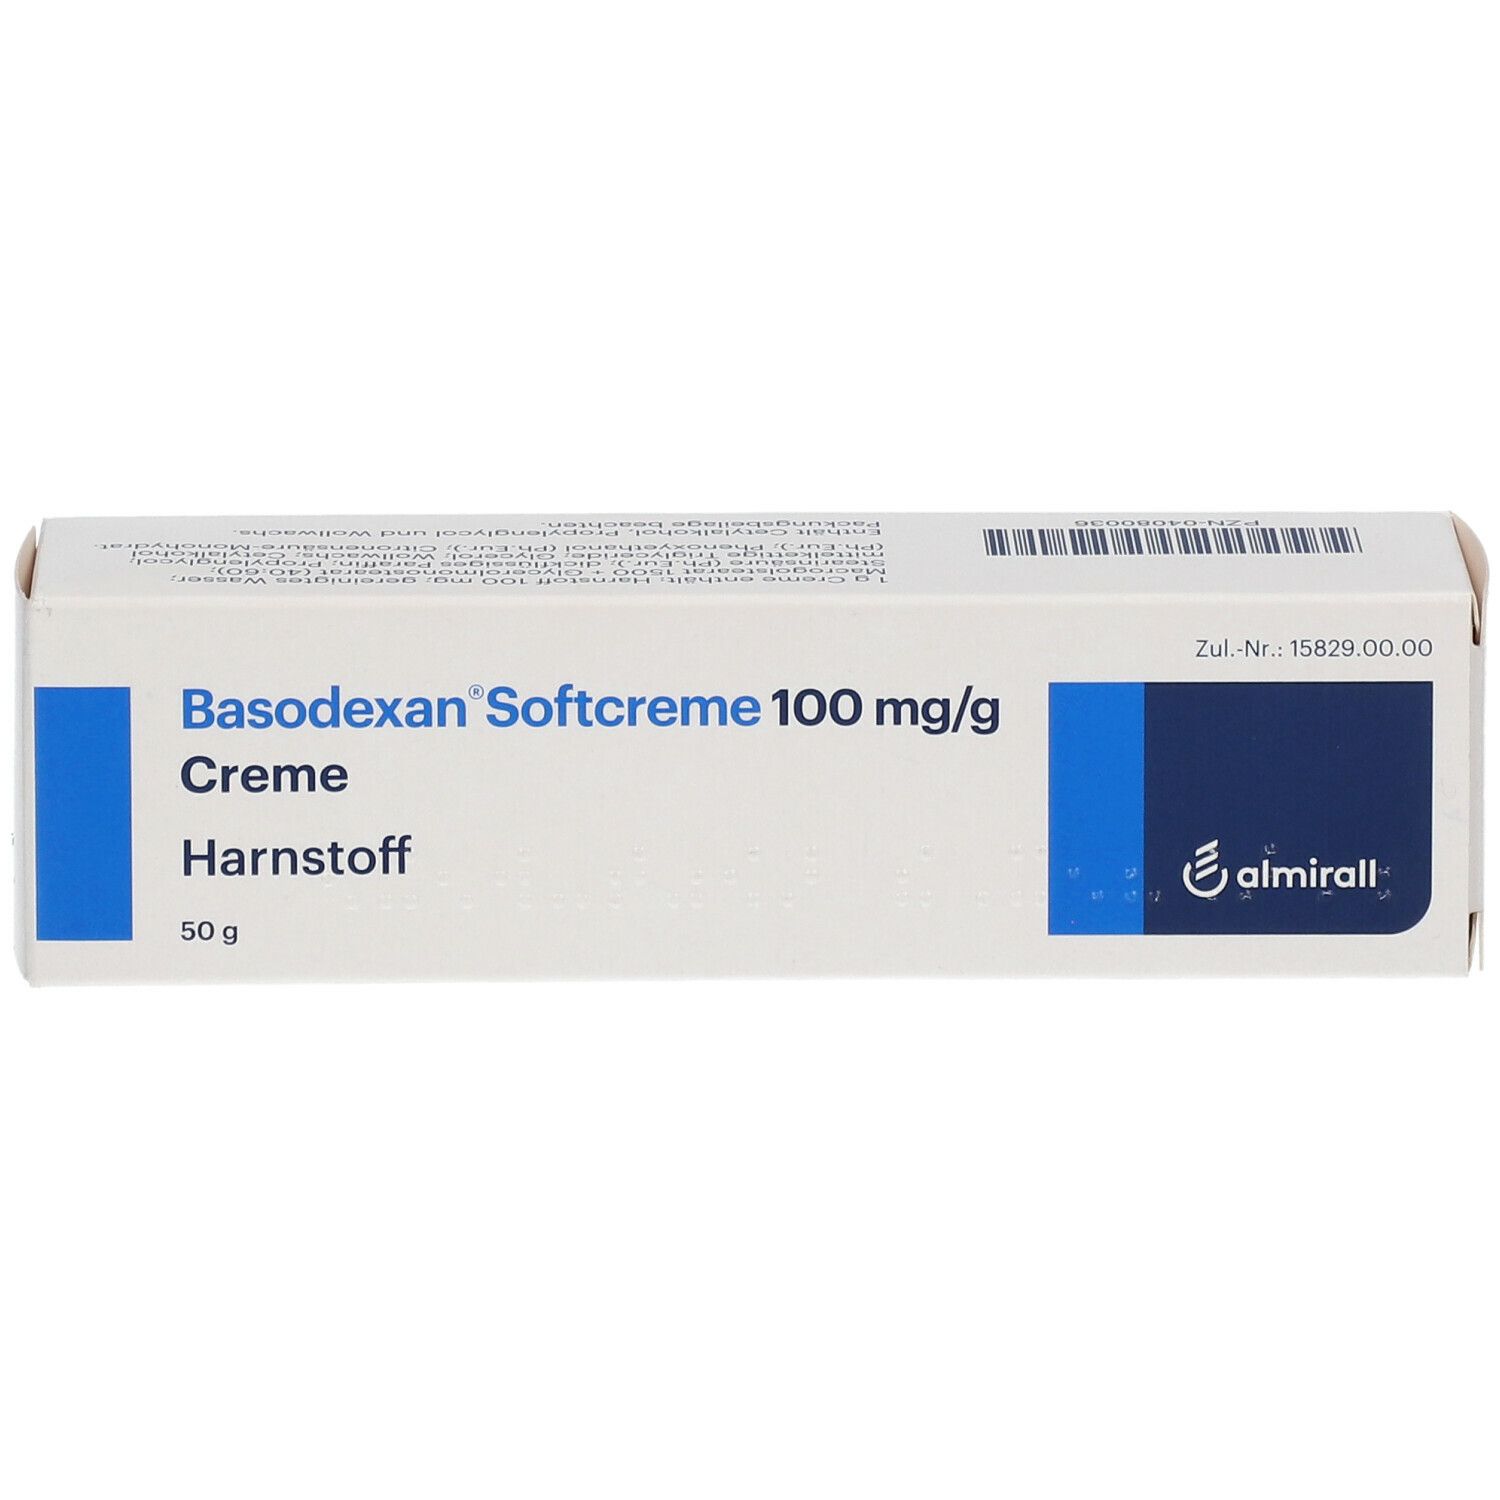 Basodexan® Softcreme